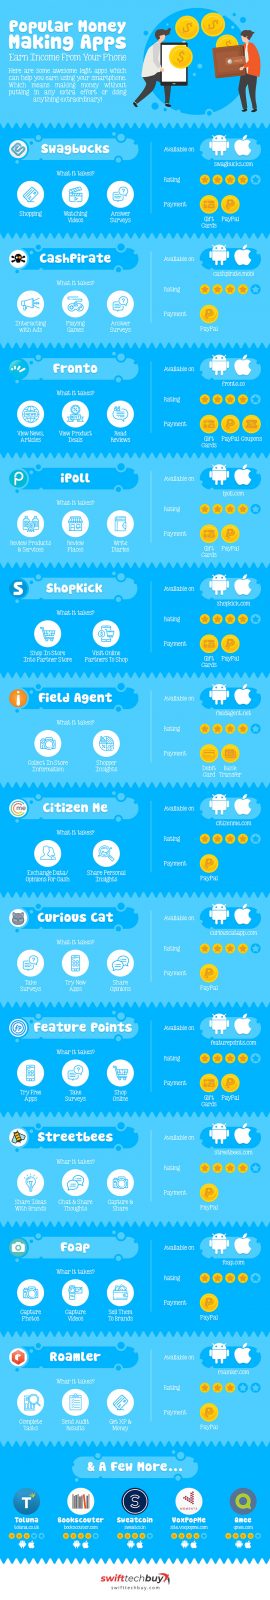 Popular Money Making Apps infographic